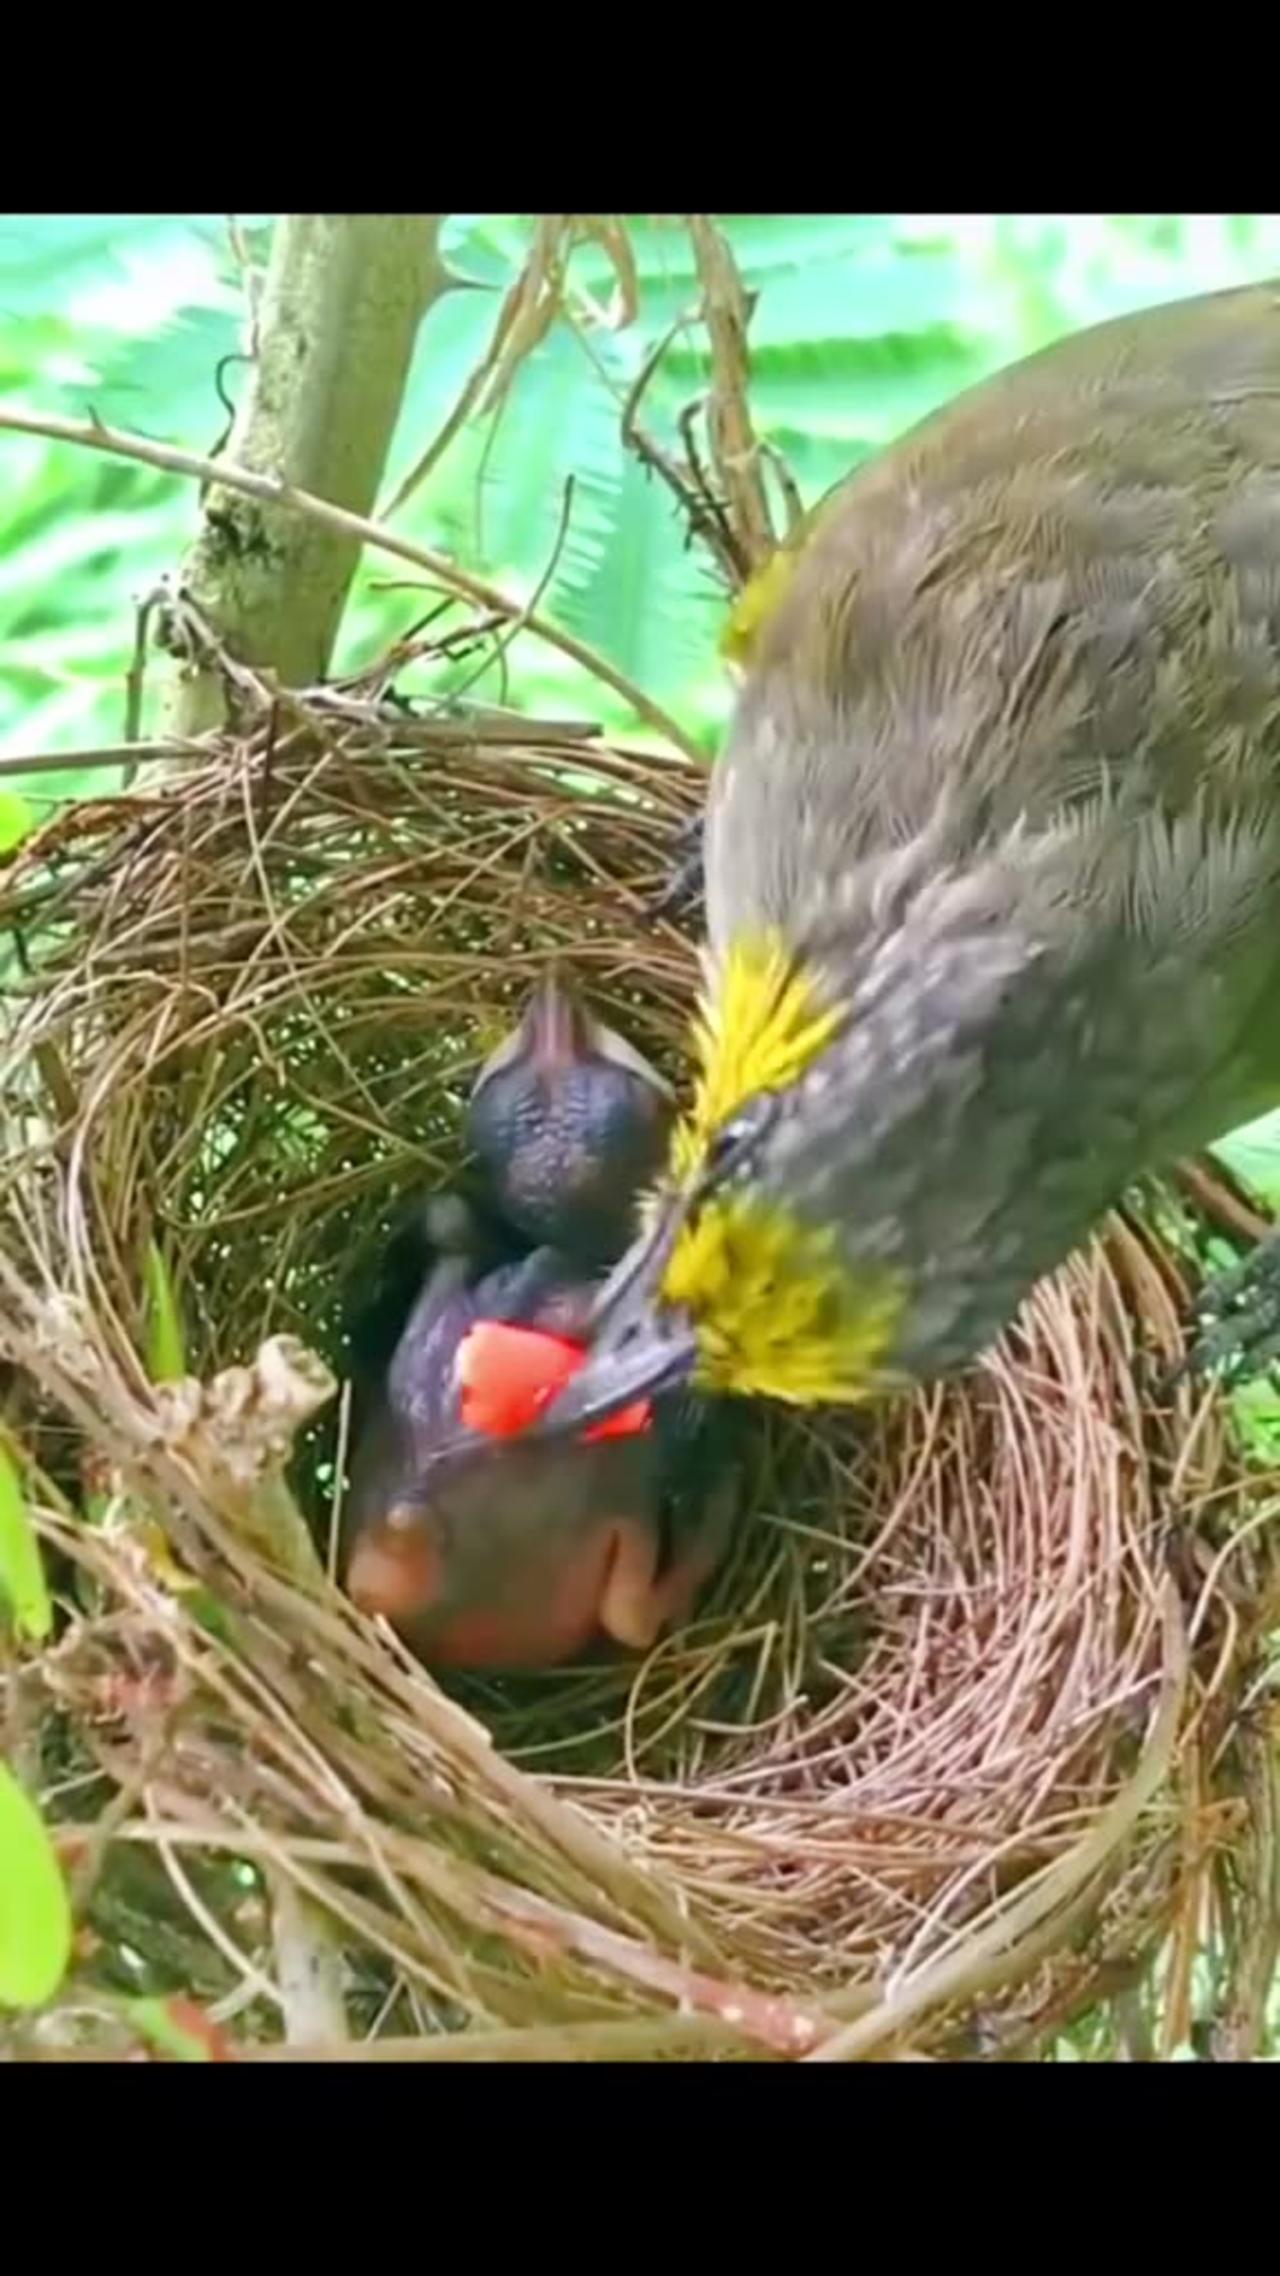 Mother bird takes care and feeds her baby bird #birdslove #nature #birds